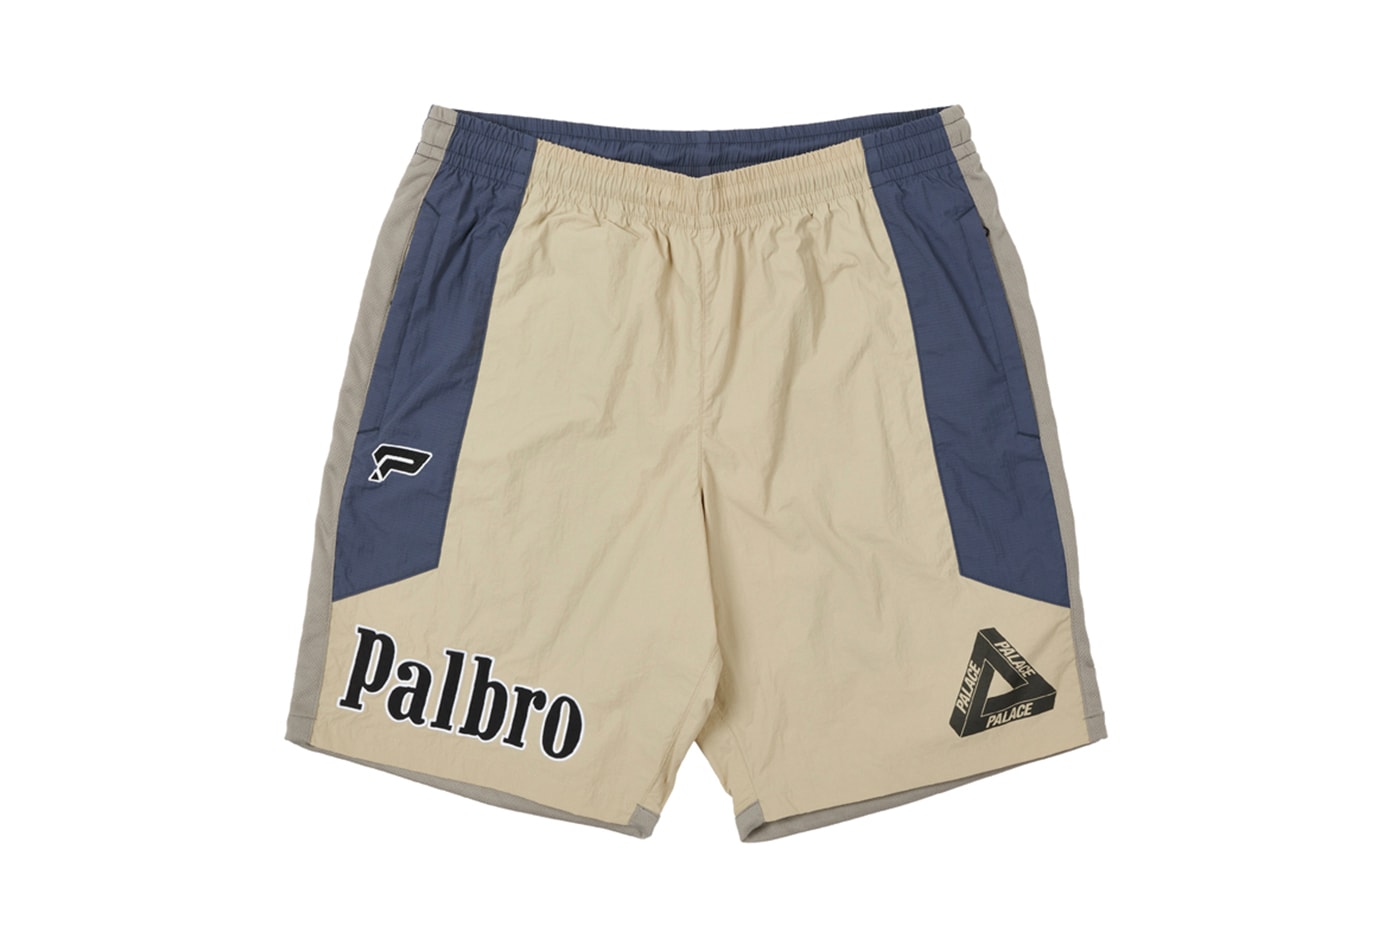 Palace Summer 2021 Tracksuits Outerwear Pants Rain Sports Gear